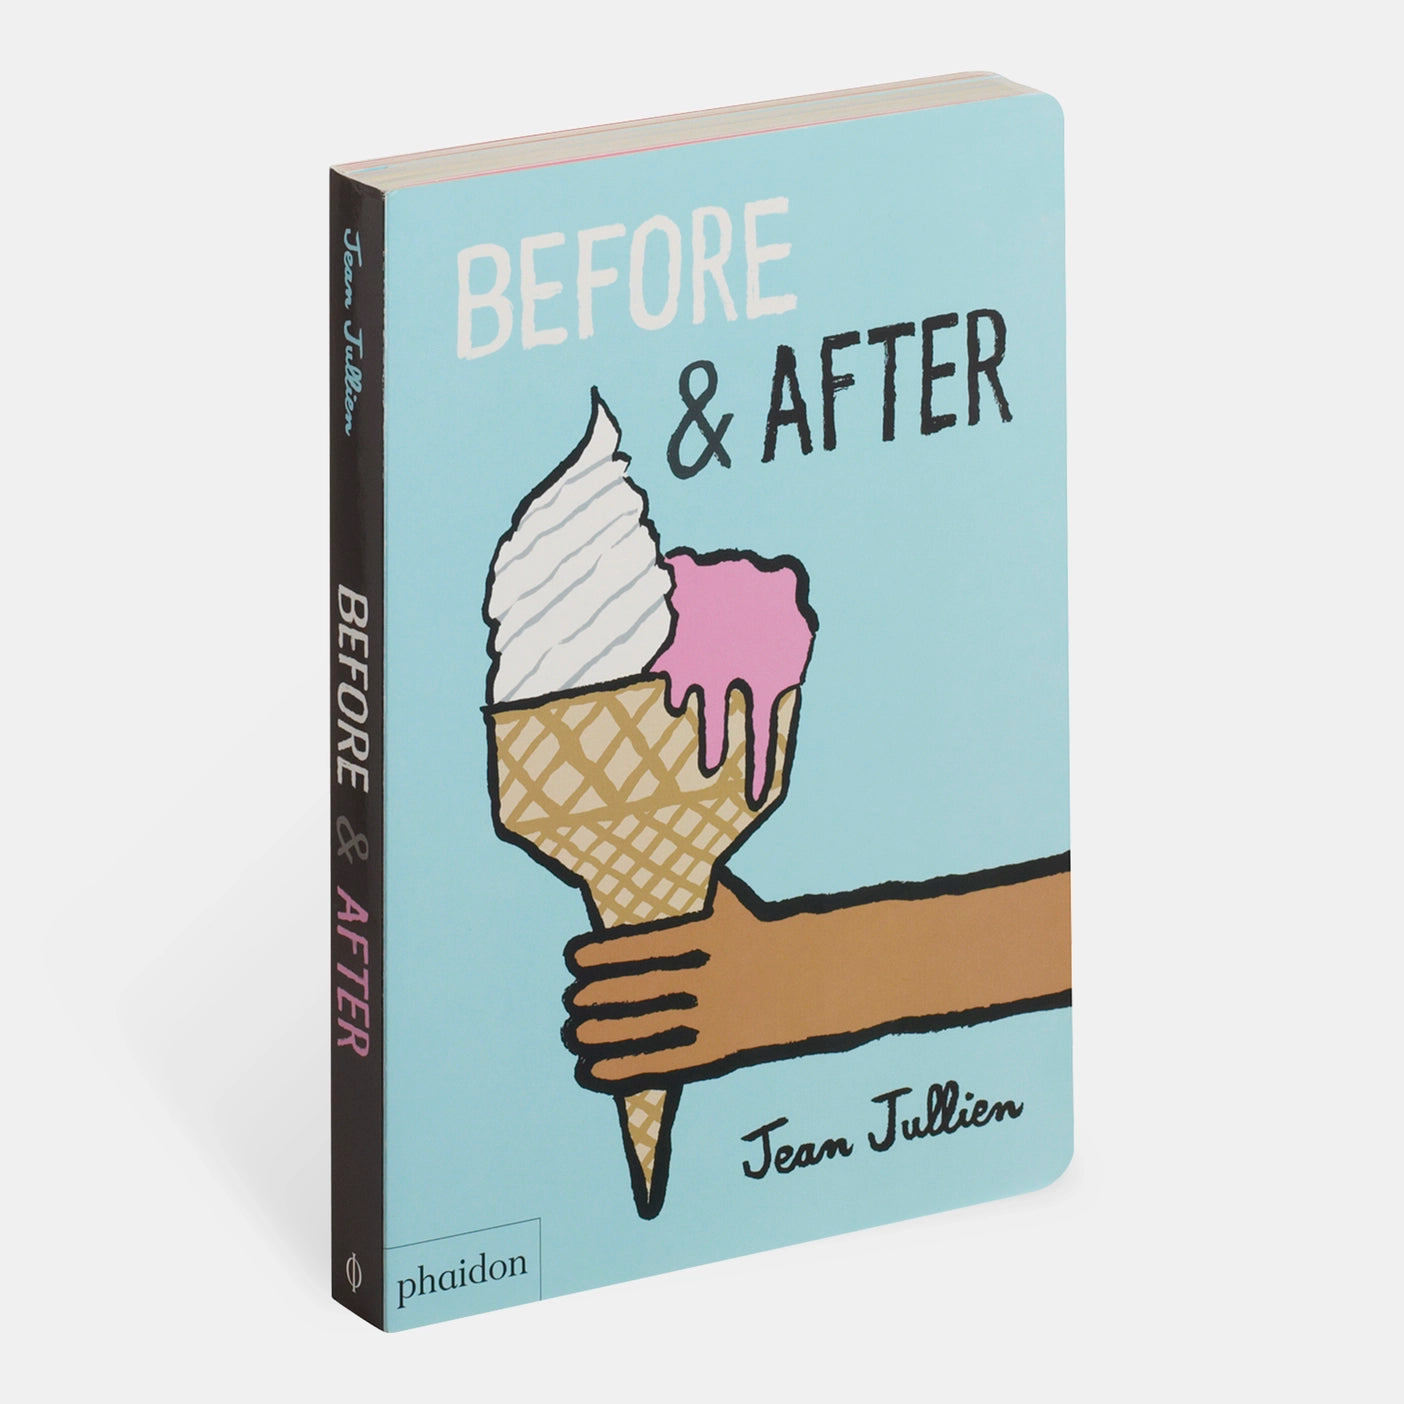 Jean Jullien: "Before & After"